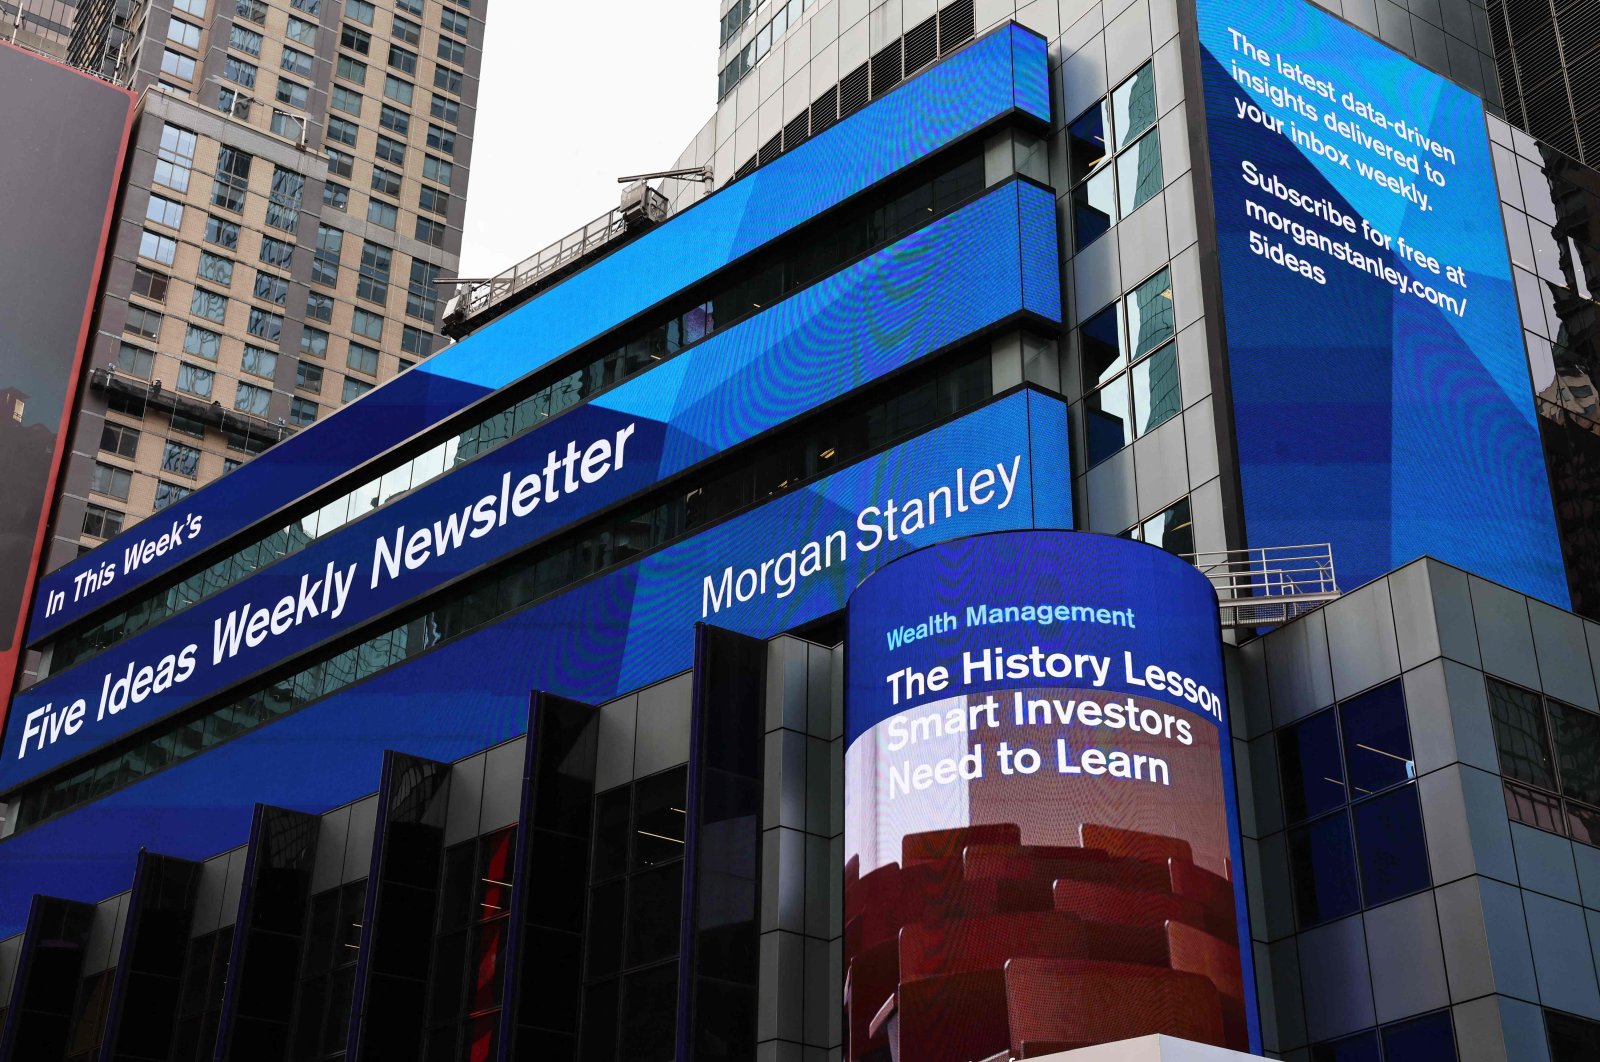 The Morgan Stanley headquarters building is seen in New York, U.S., Jan. 17, 2023. (AFP Photo)